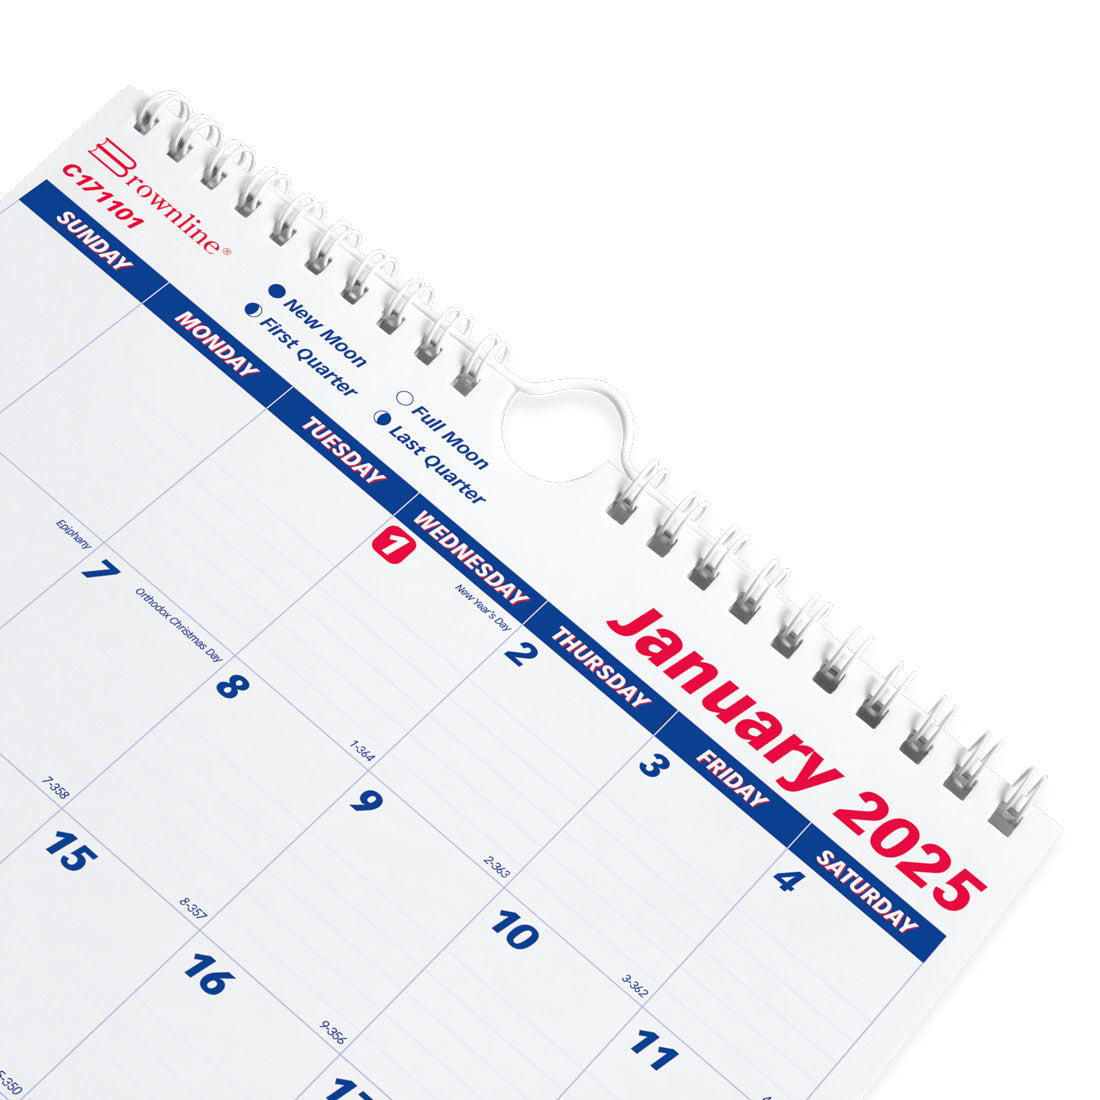 Monthly Wall Calendar 2025, English, C171101